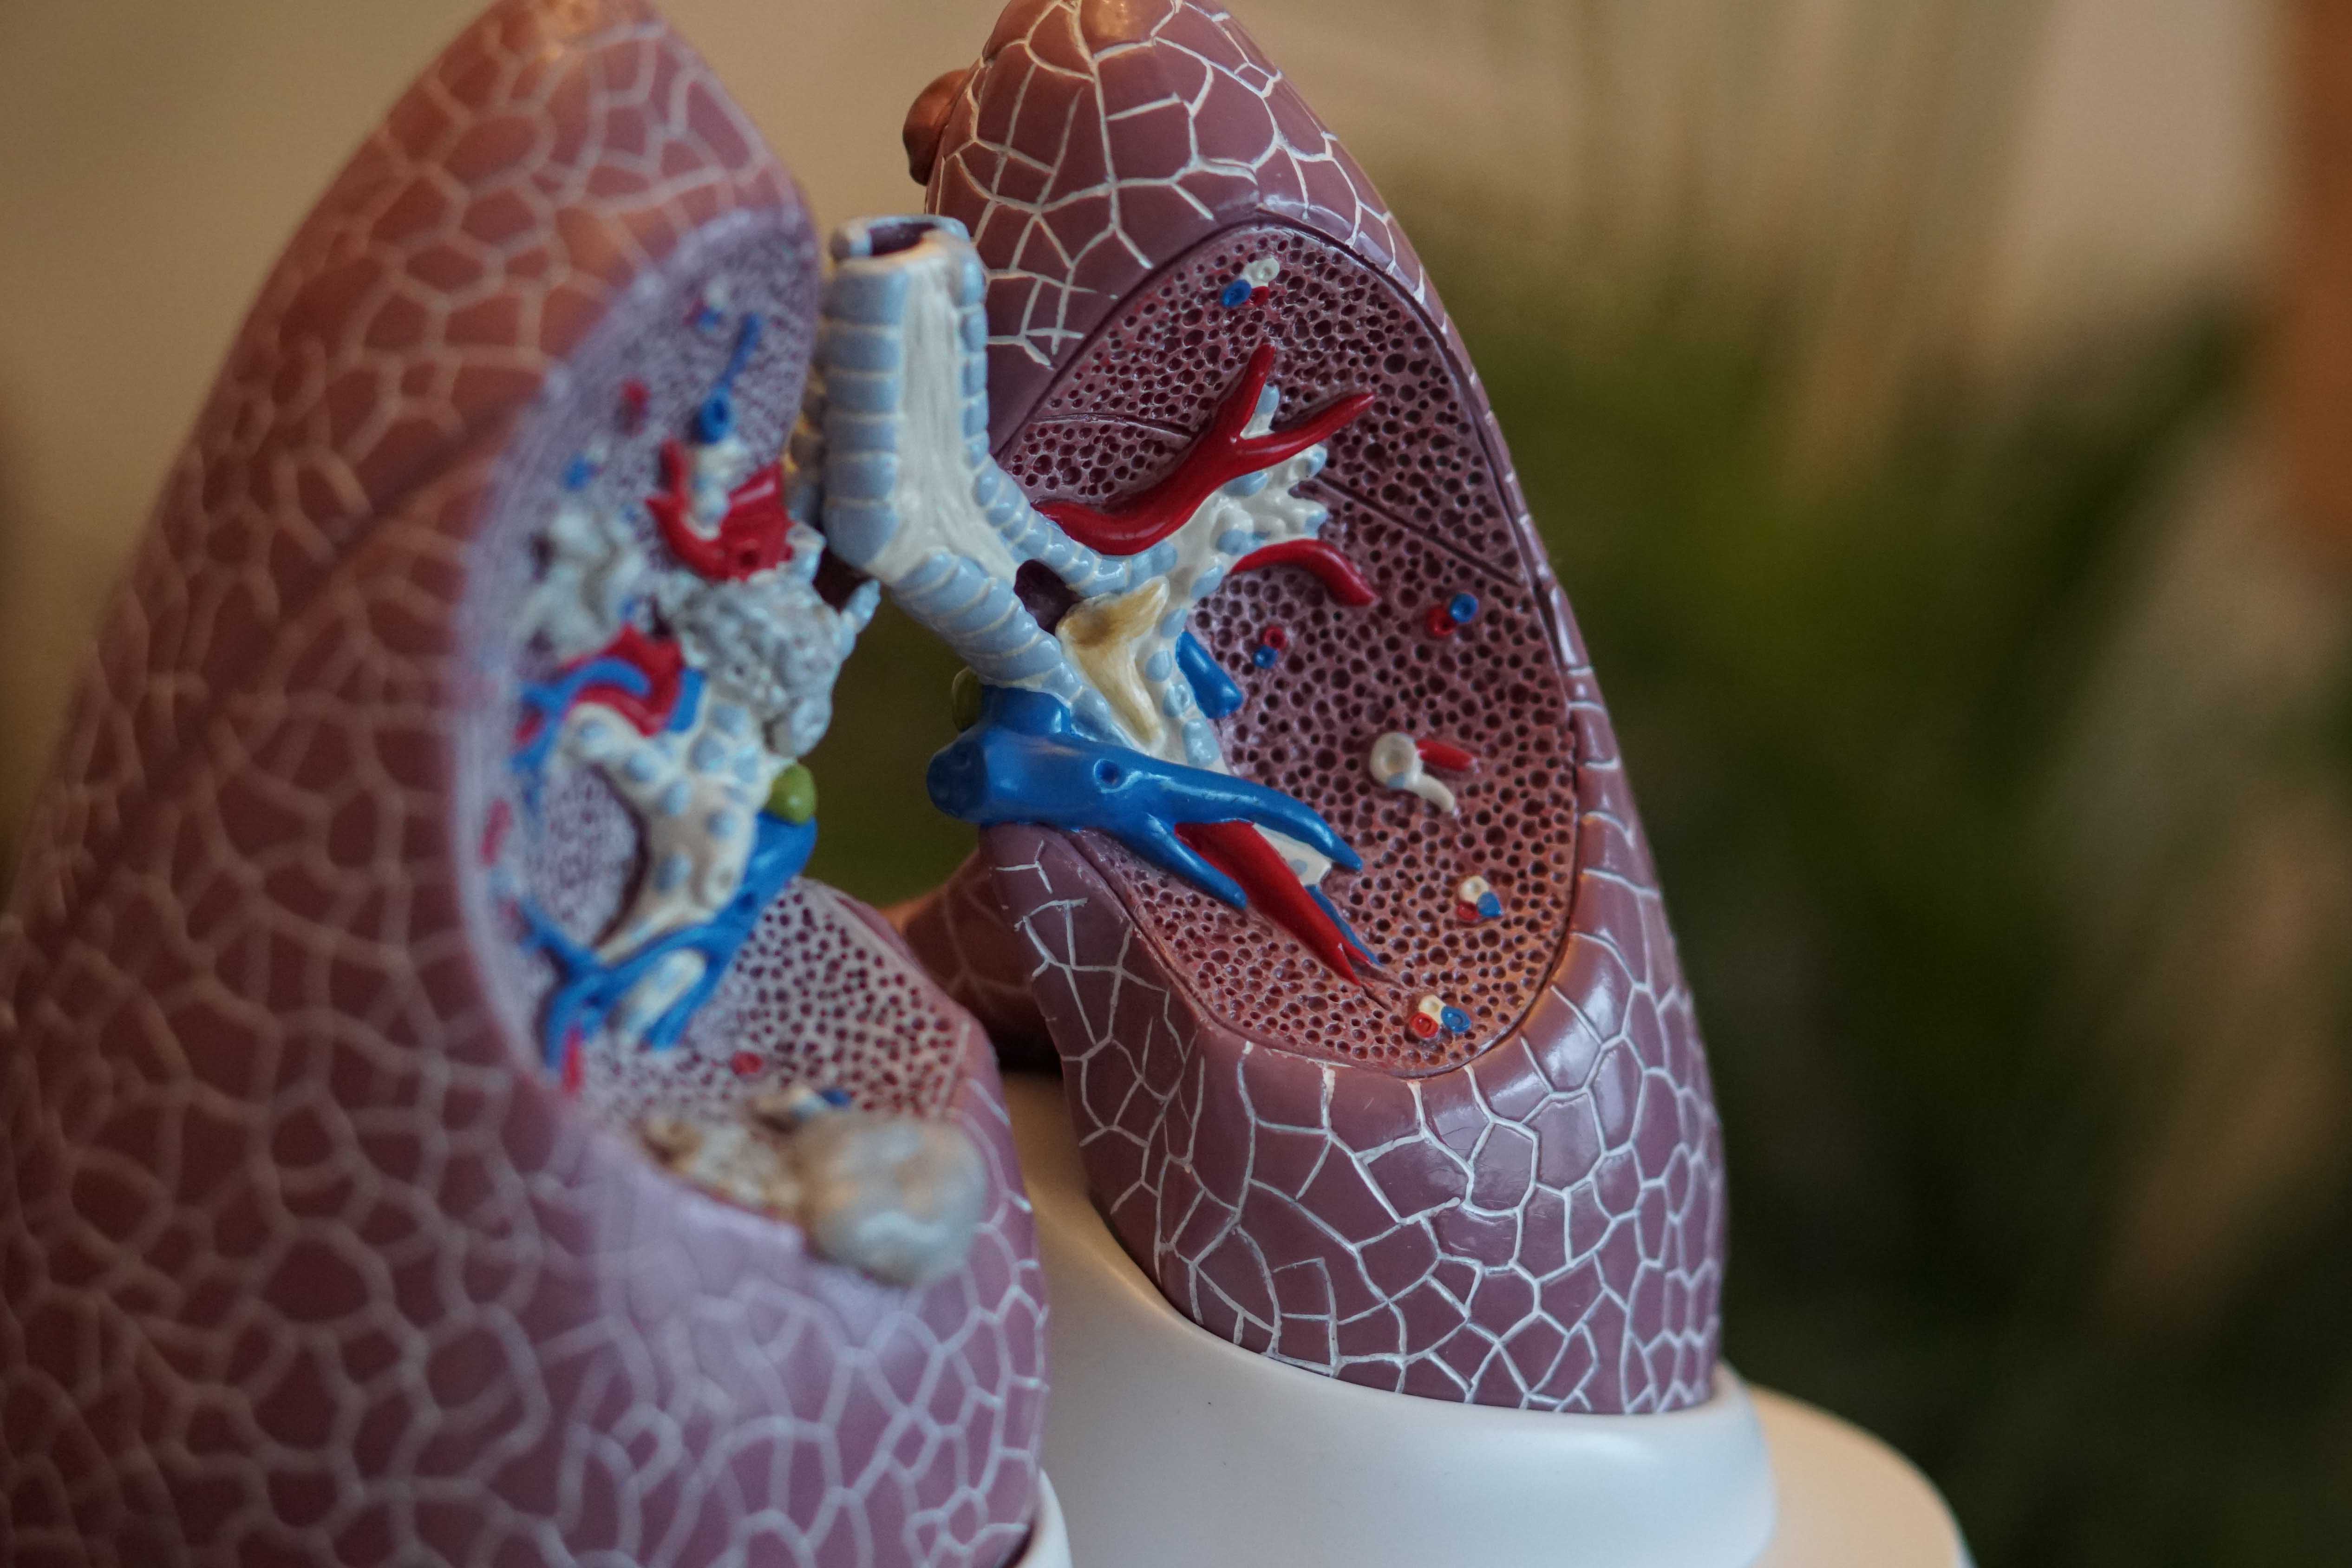 Lung Cancer Blog